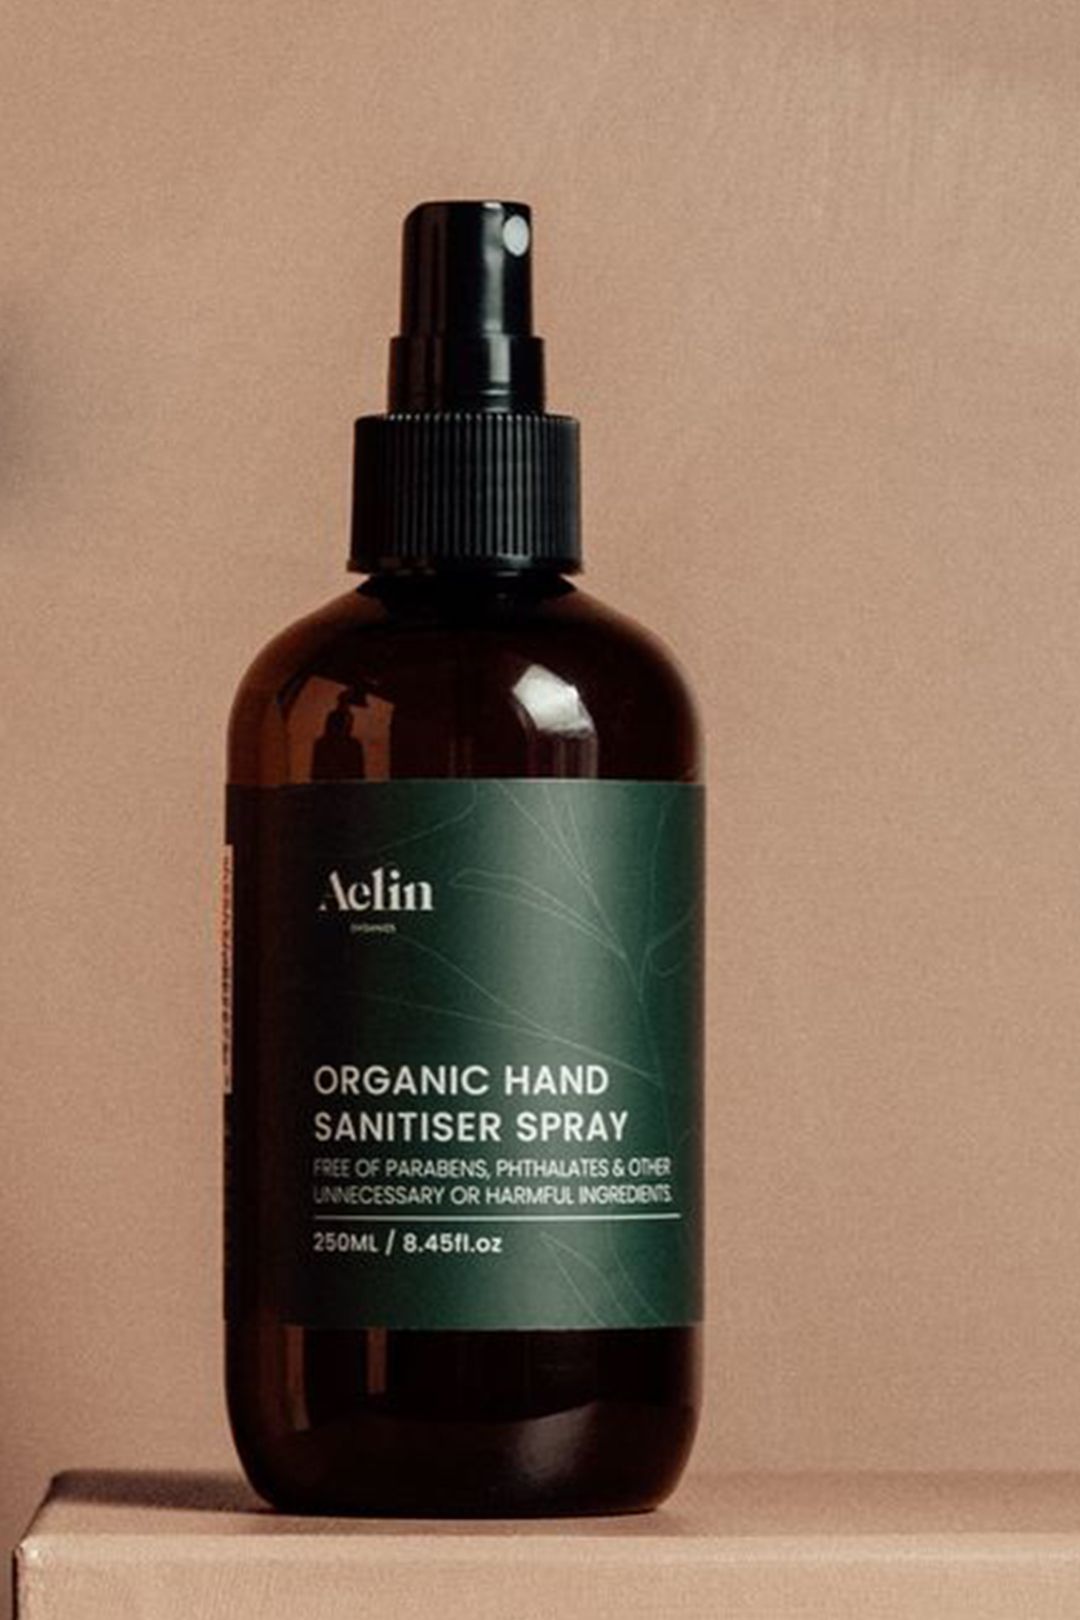 Aelin Organics - Hand Sanitiser Spray - Lifestyle